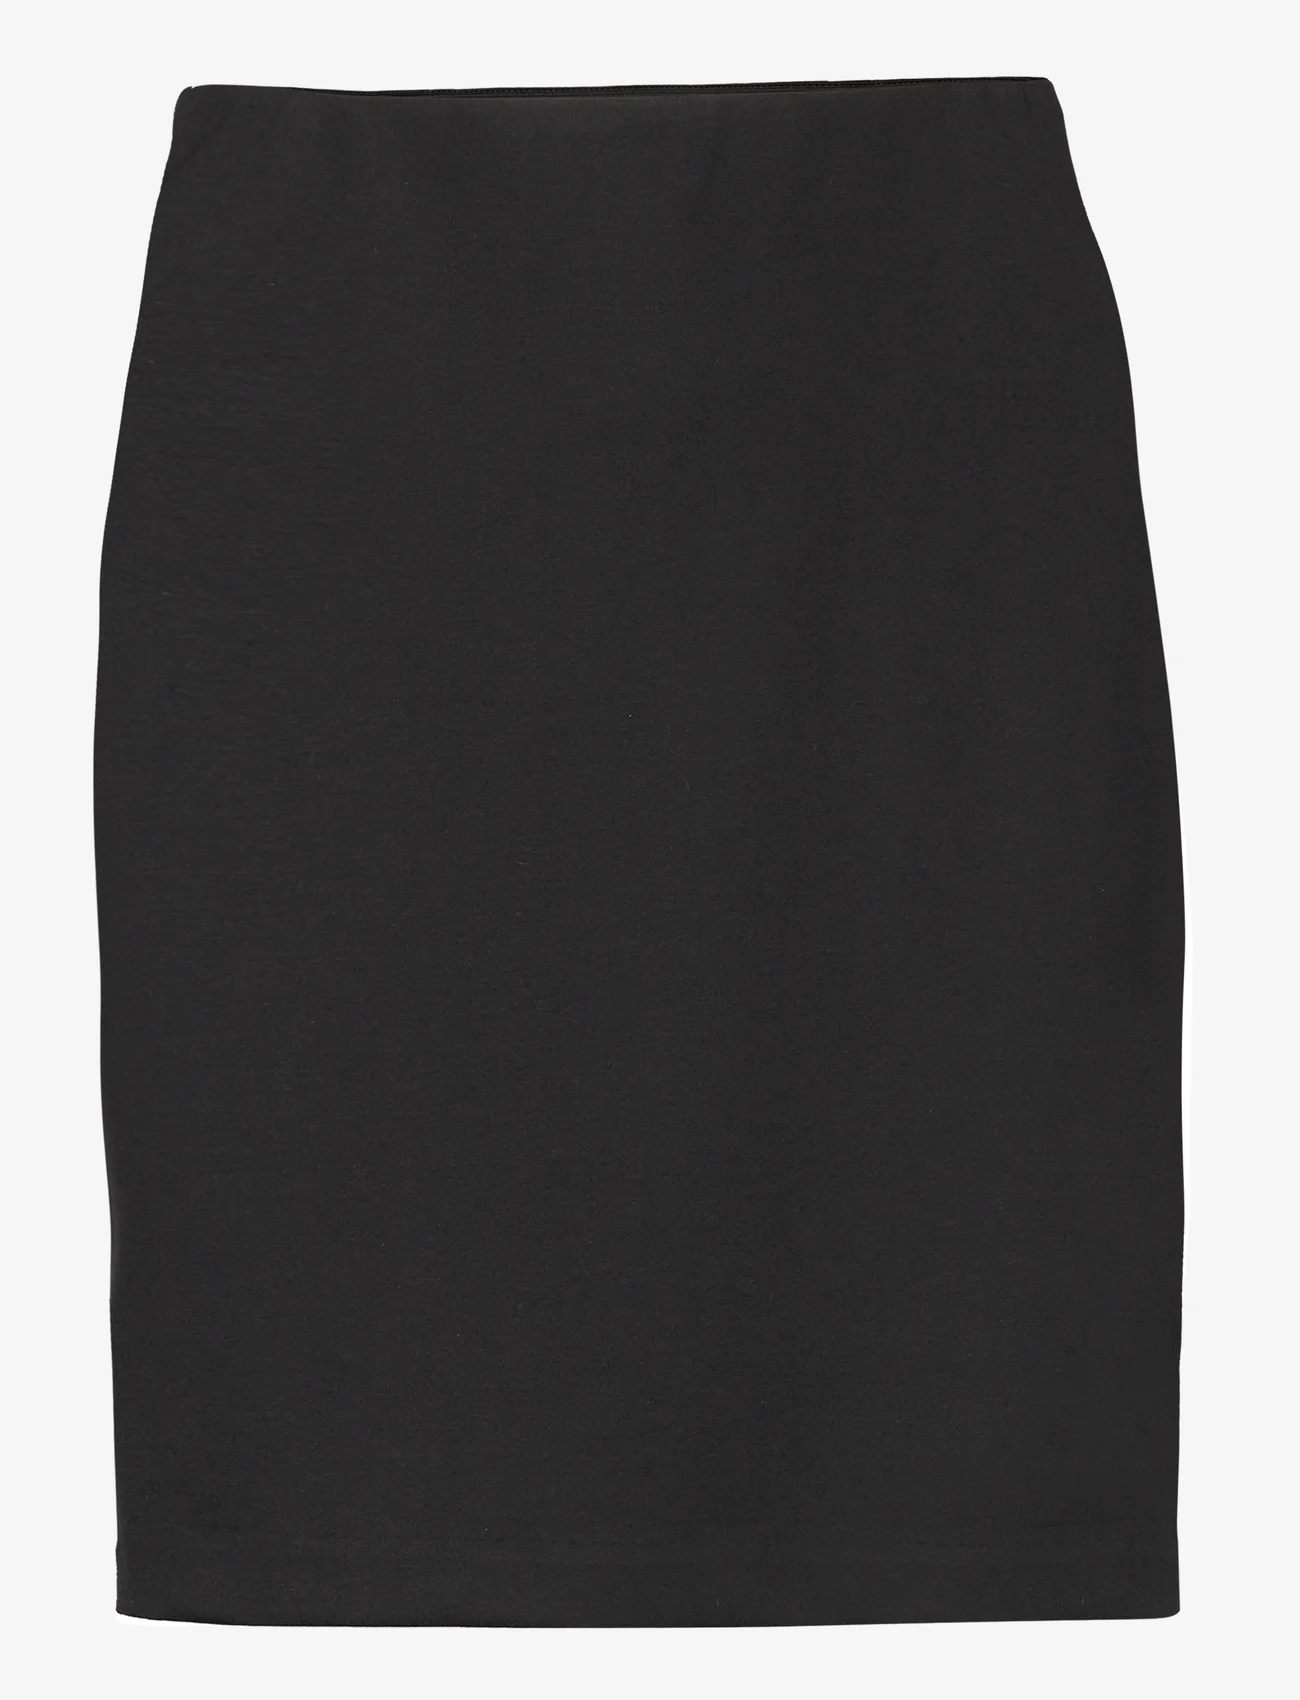 Part Two - CorinnePW SK - short skirts - black - 0